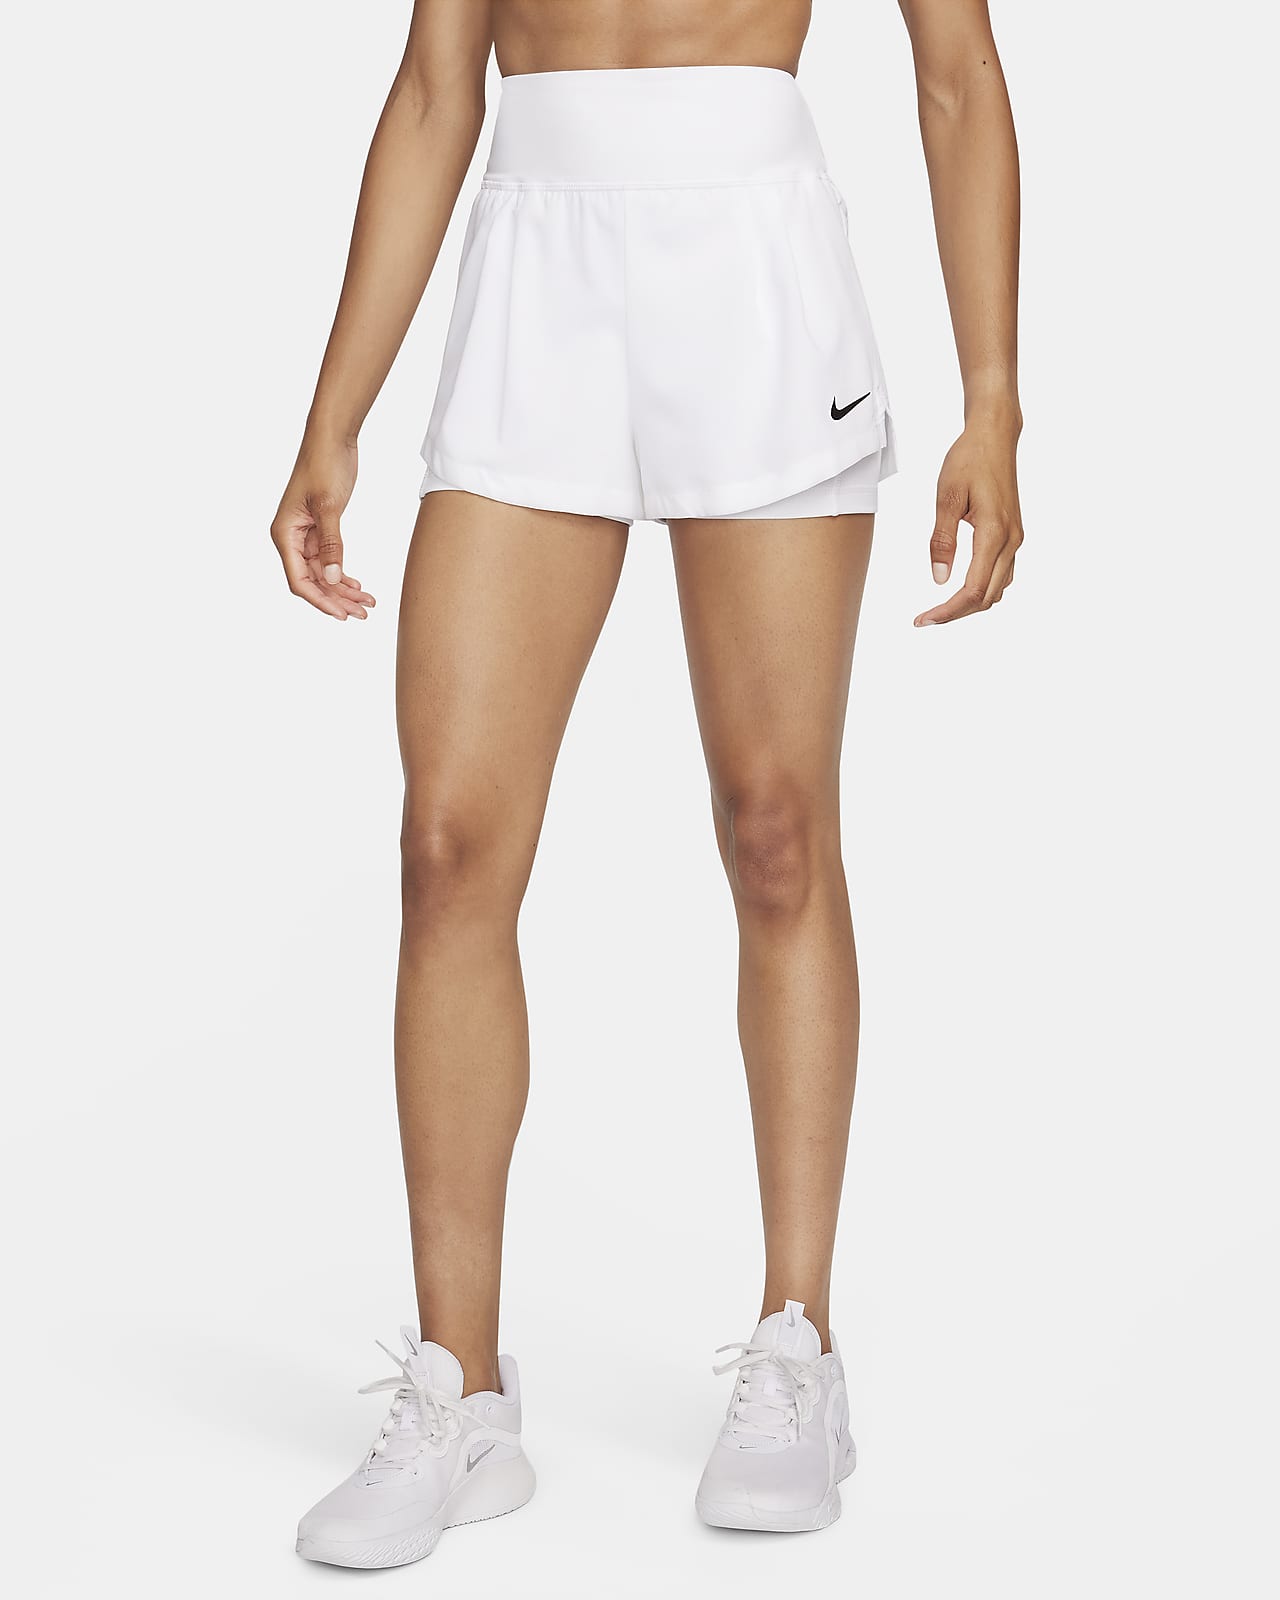 NikeCourt Advantage Women's Shorts. Nike CA